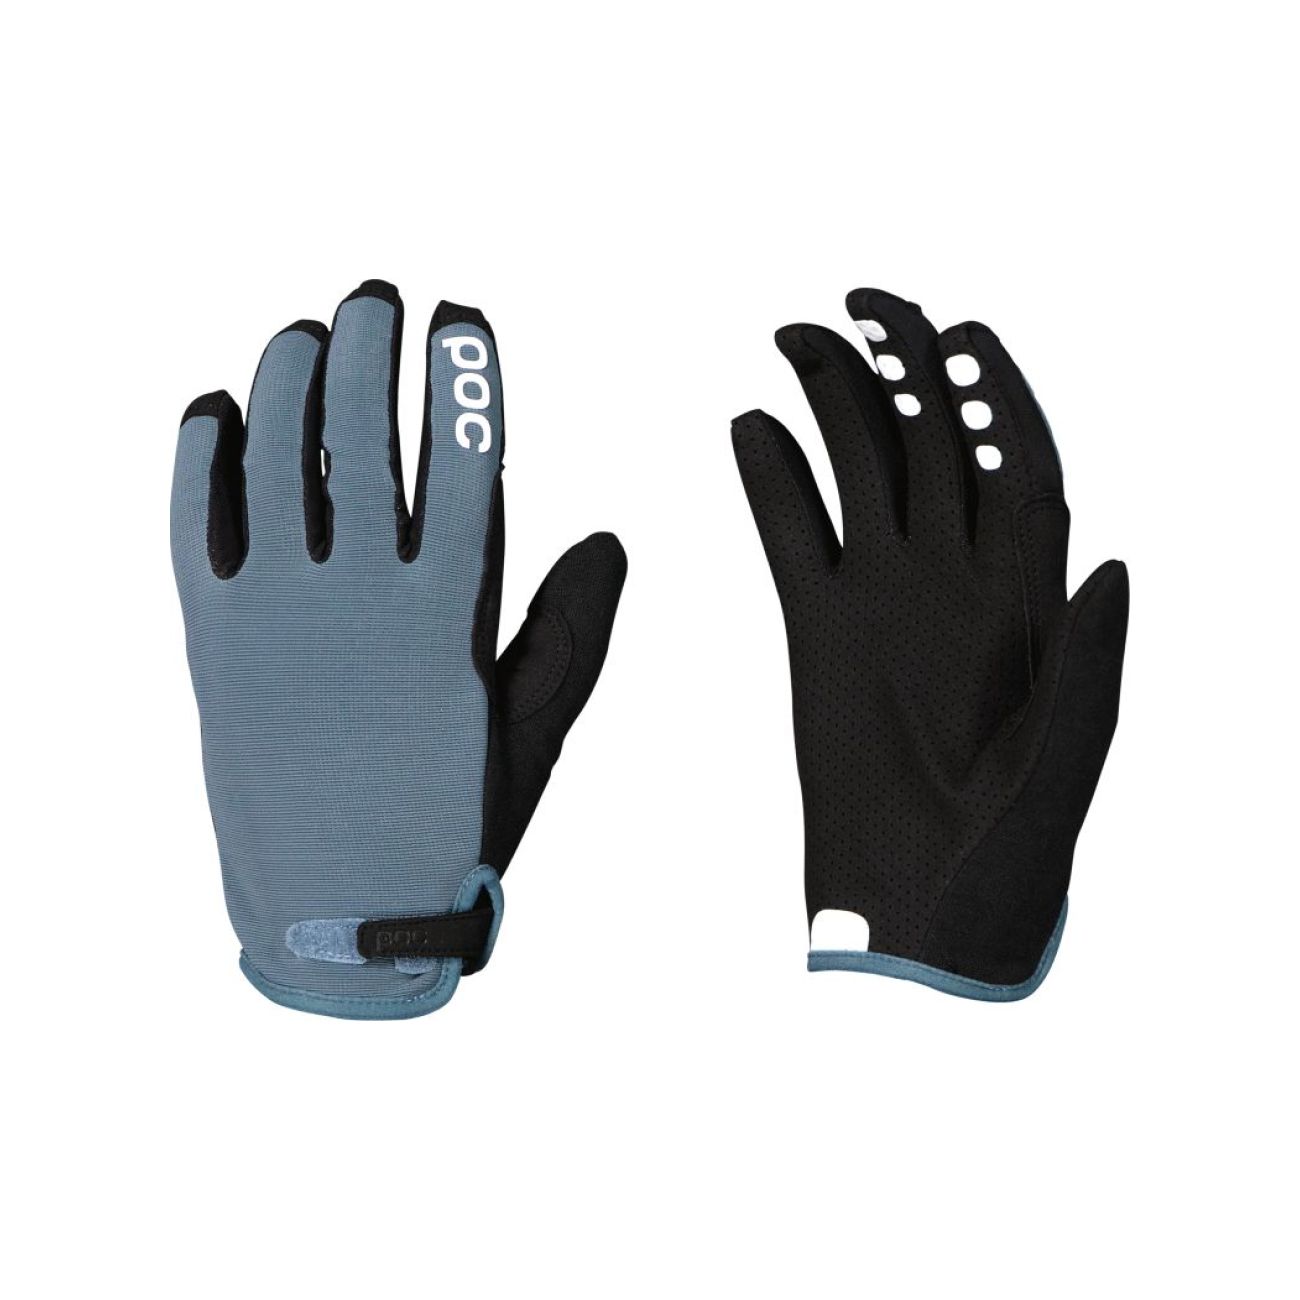 
                POC Cyklistické rukavice dlhoprsté - RESISTANCE ENDURO  - modrá/čierna XL
            